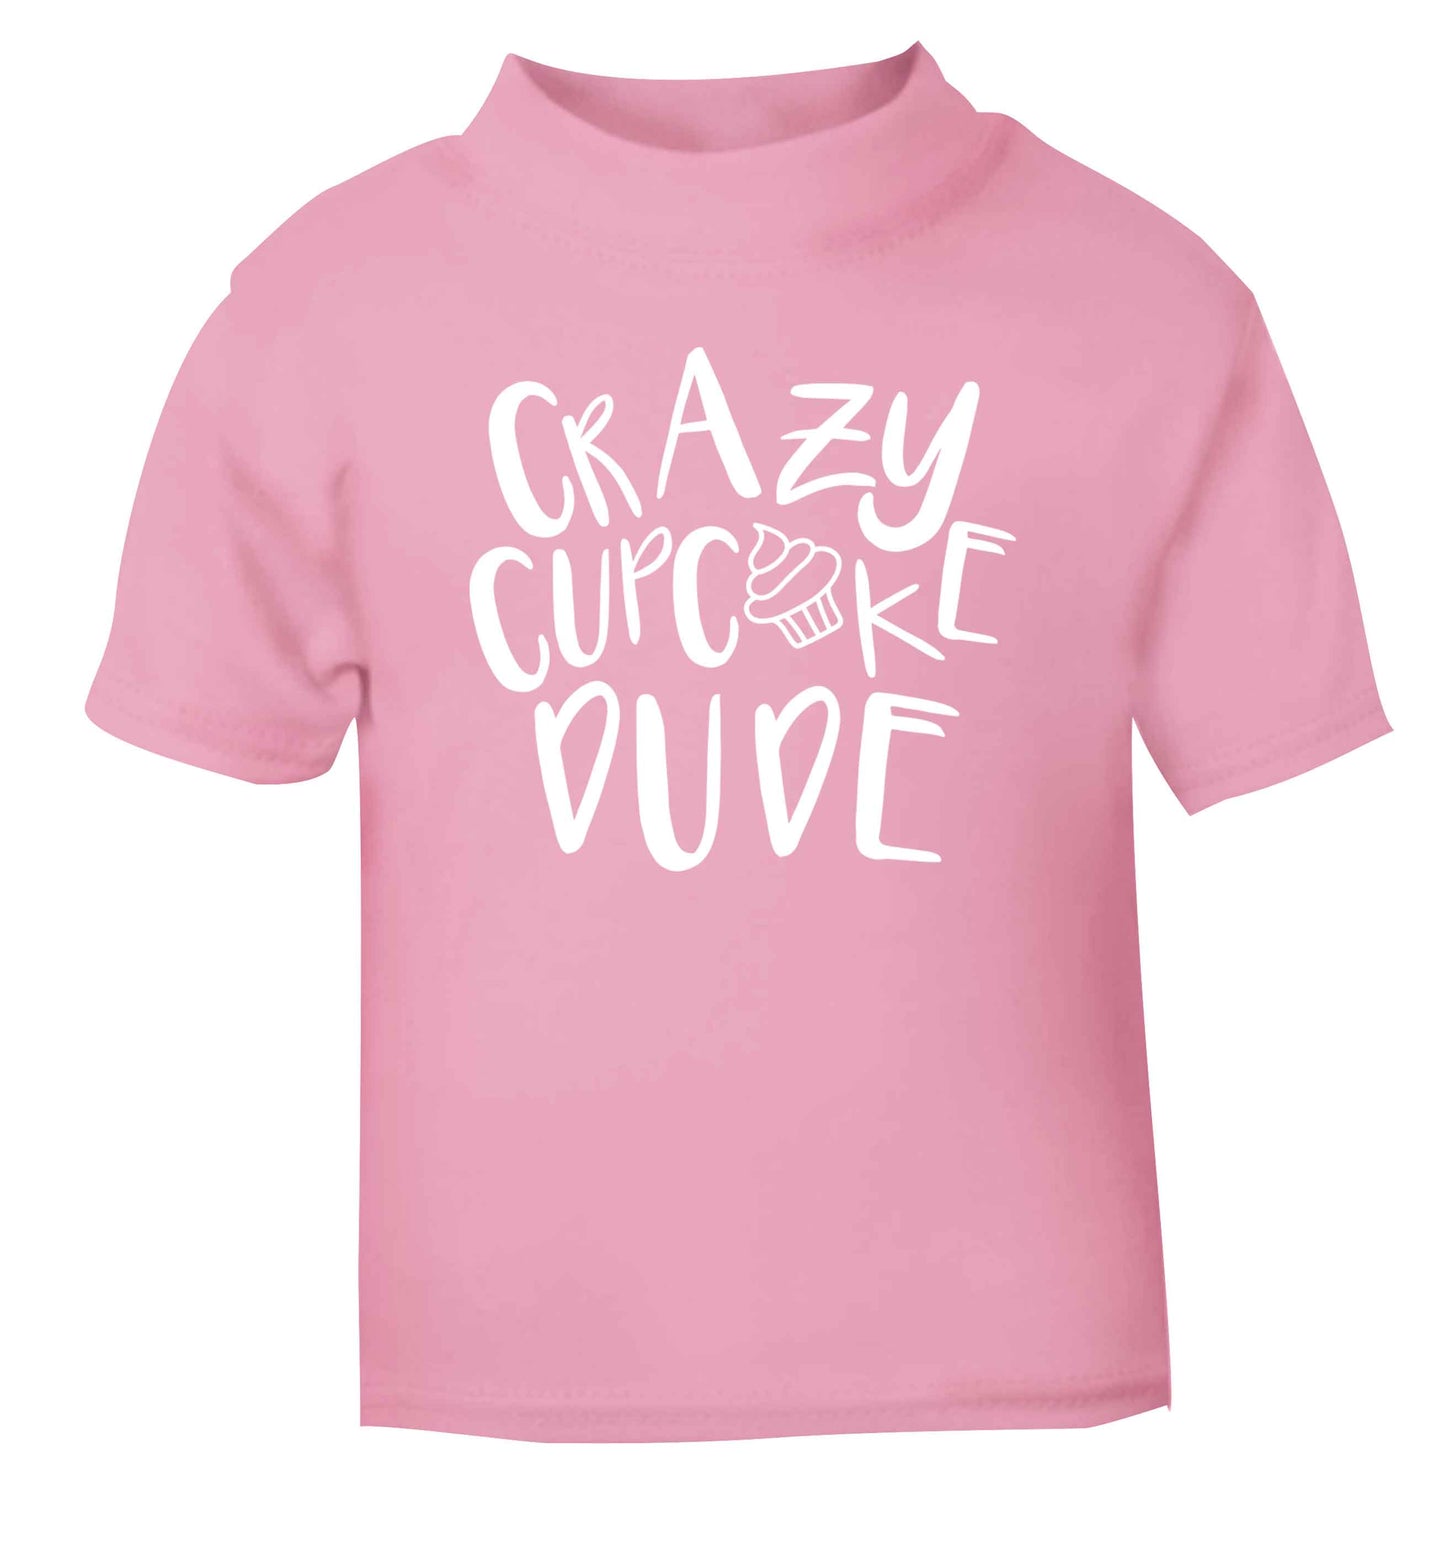 Crazy cupcake dude light pink Baby Toddler Tshirt 2 Years